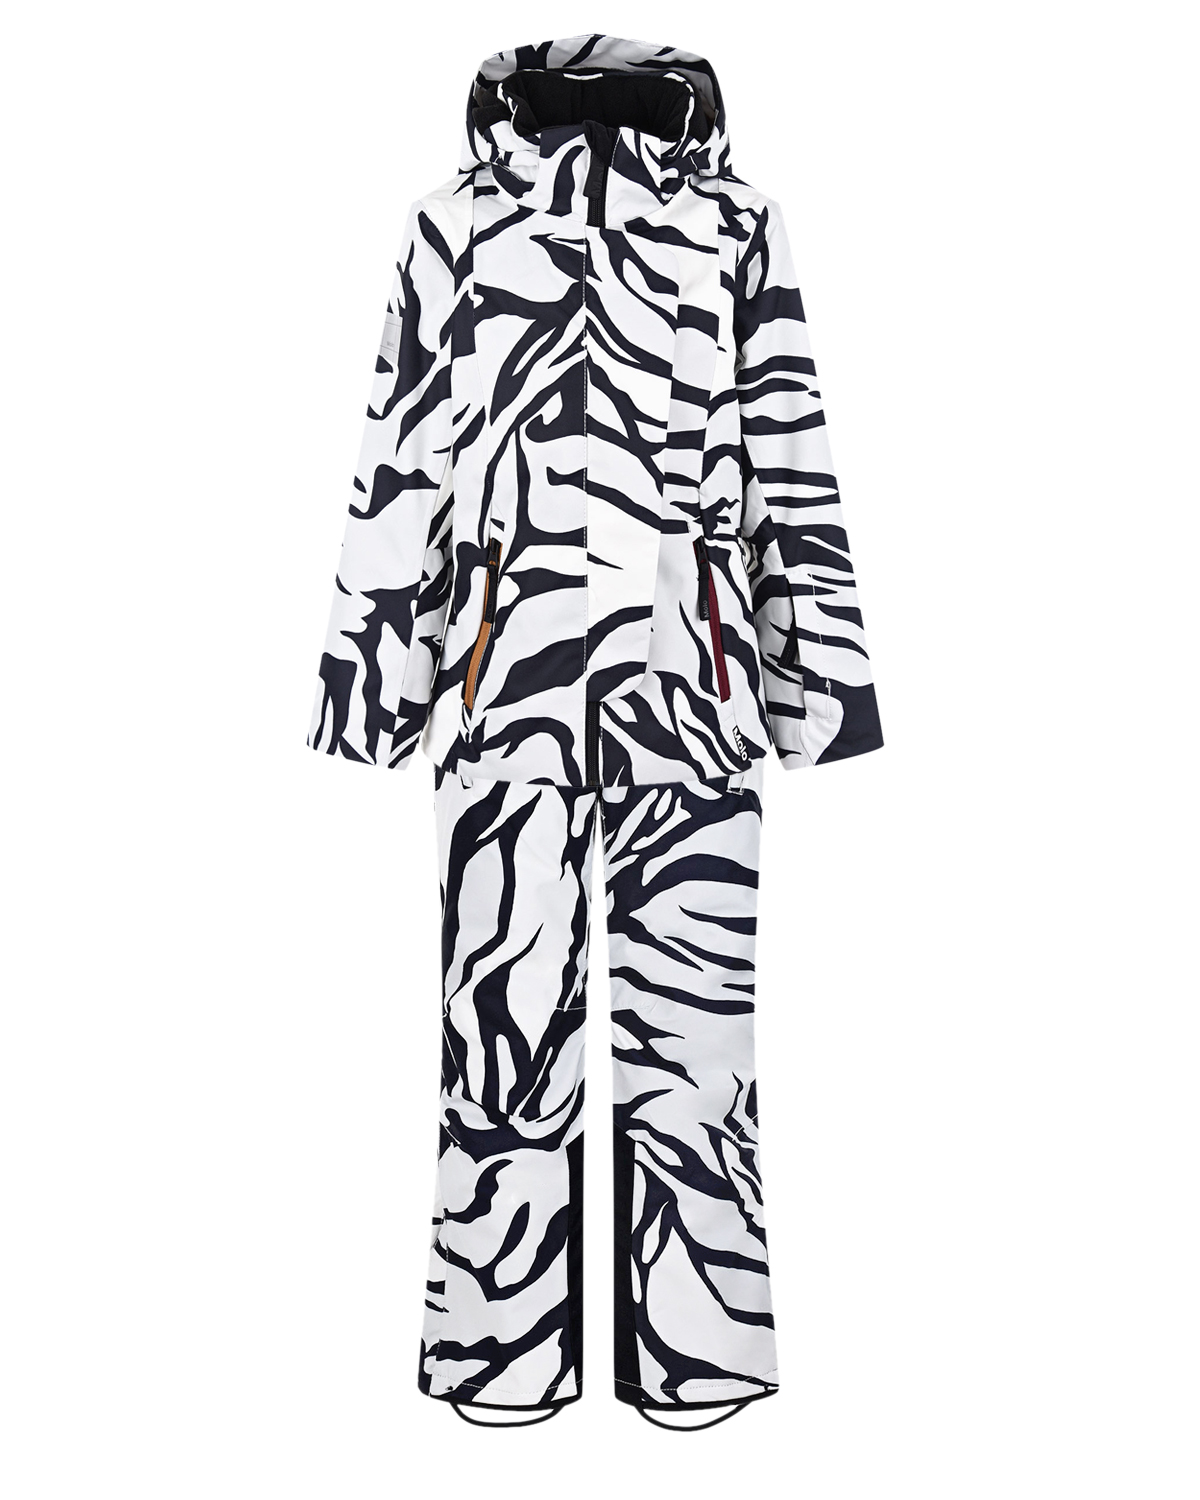 Комплект с принтом "зебра" (куртка, брюки, подтяжки) Molo детский